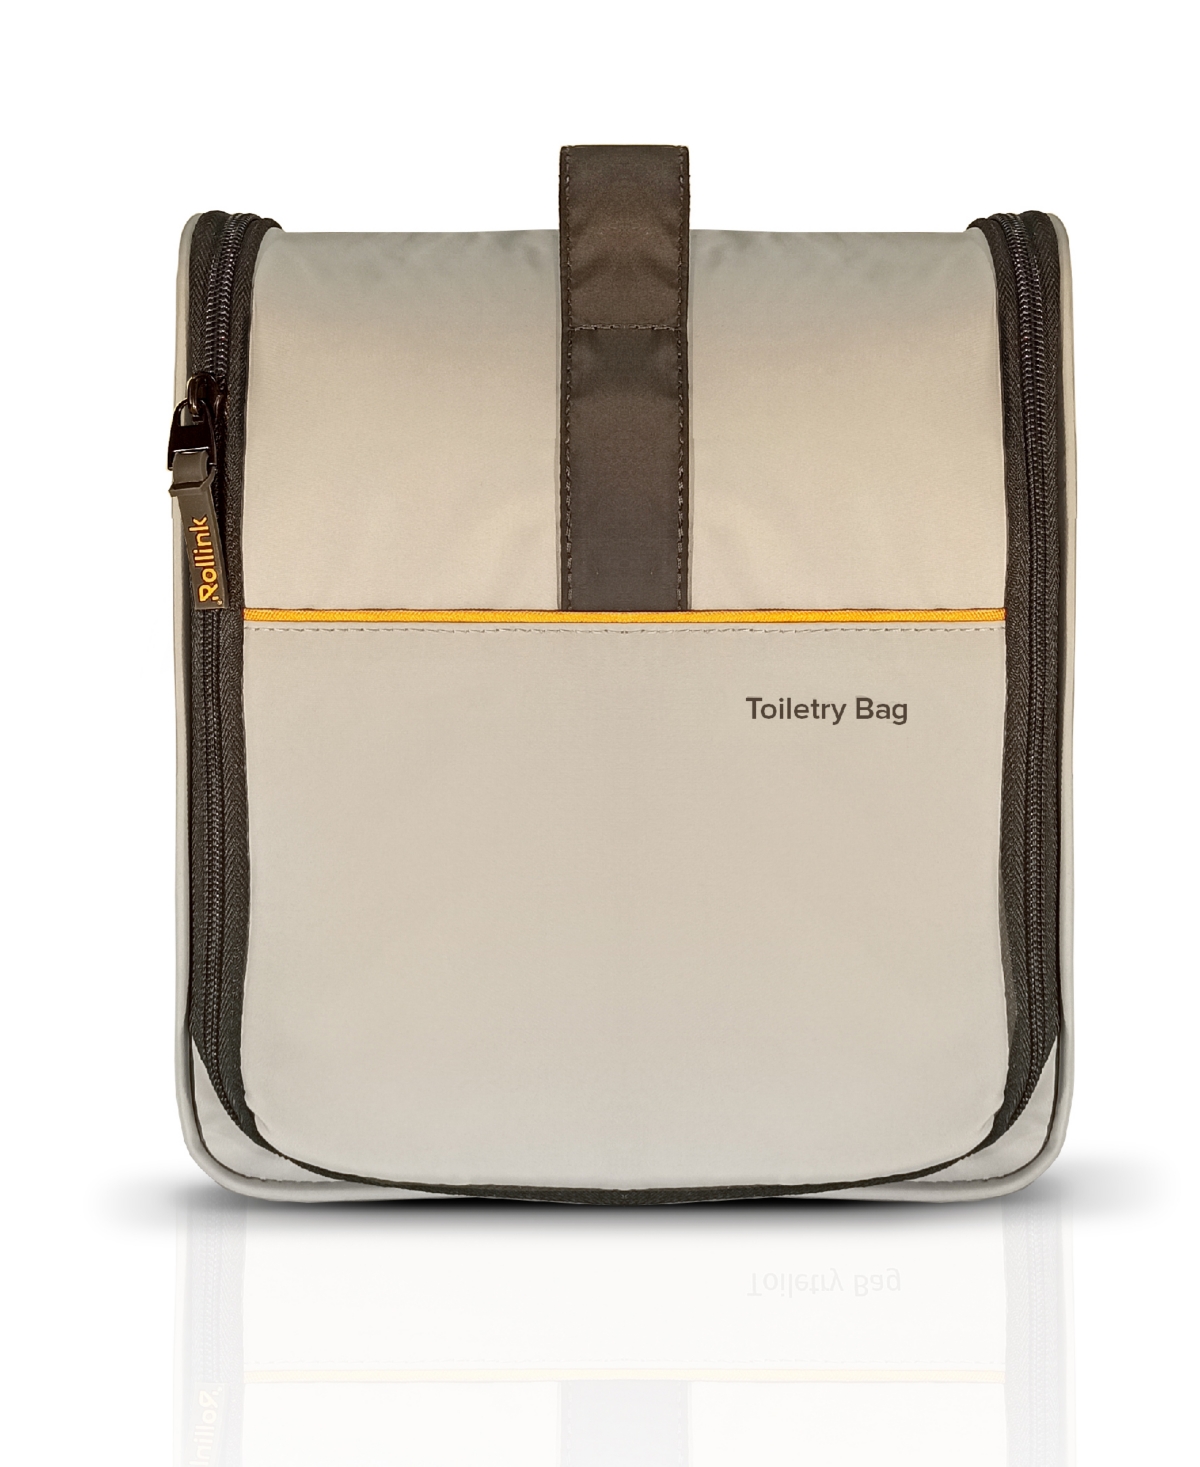 Hanging Premium Toiletry Bag - Silver-Tone Gray